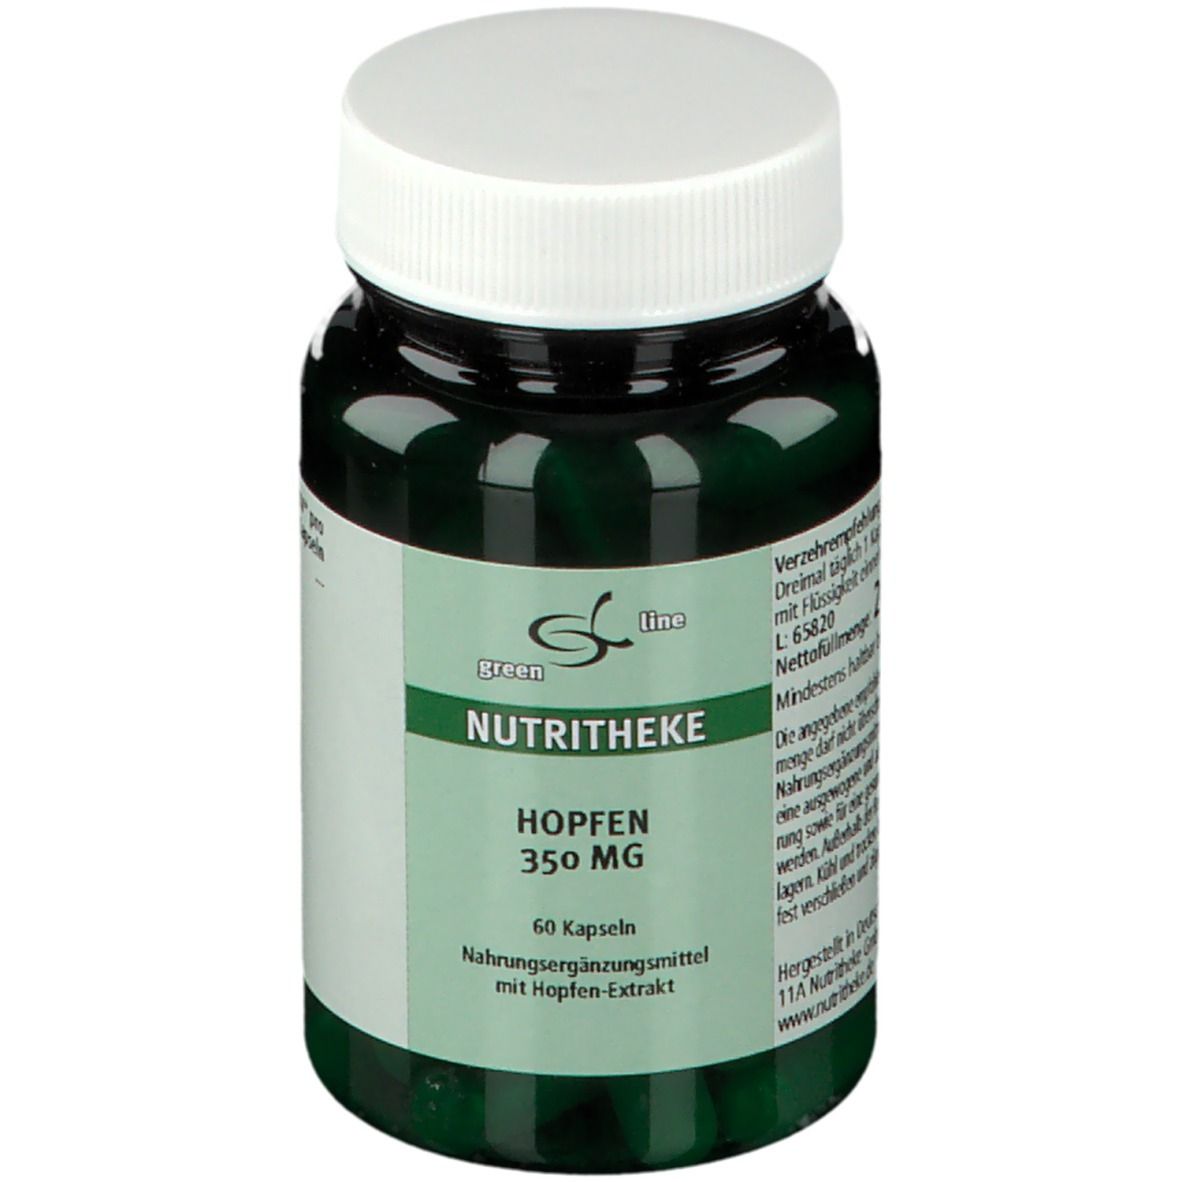 11 A Nutritheke GmbH green line Hopfen 350 mg